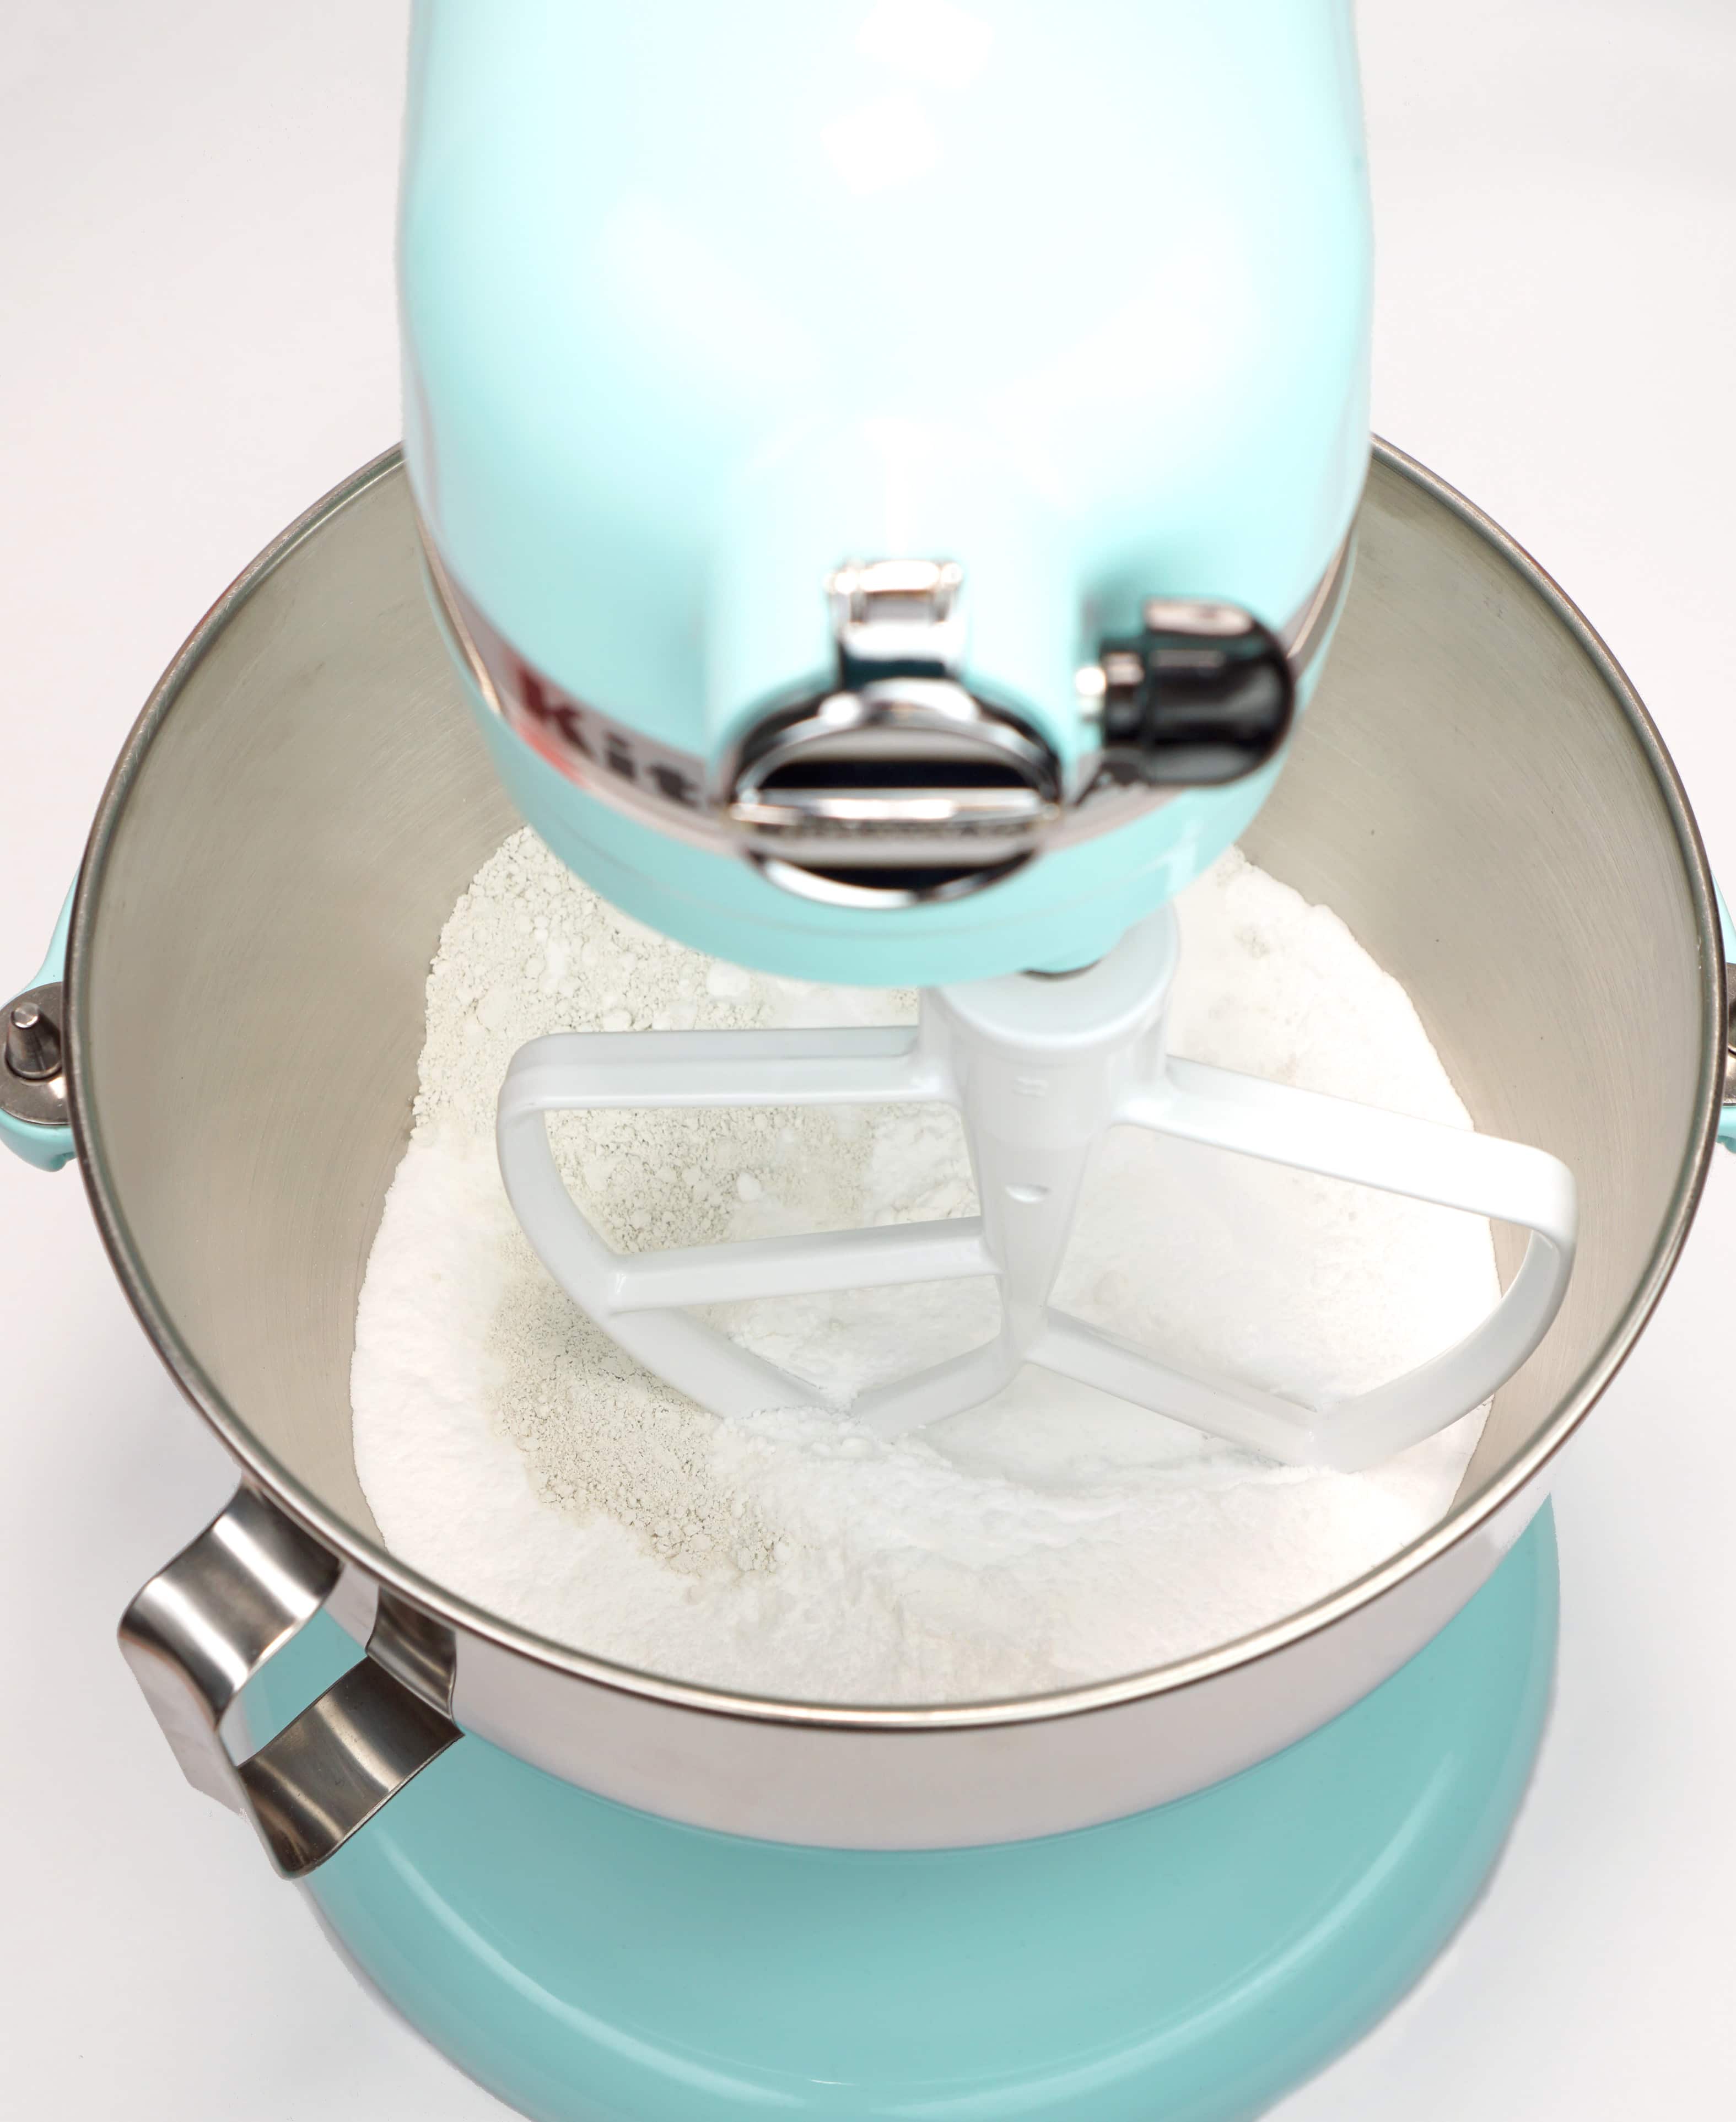 Bath bomb dry ingredients in aqua stand mixer